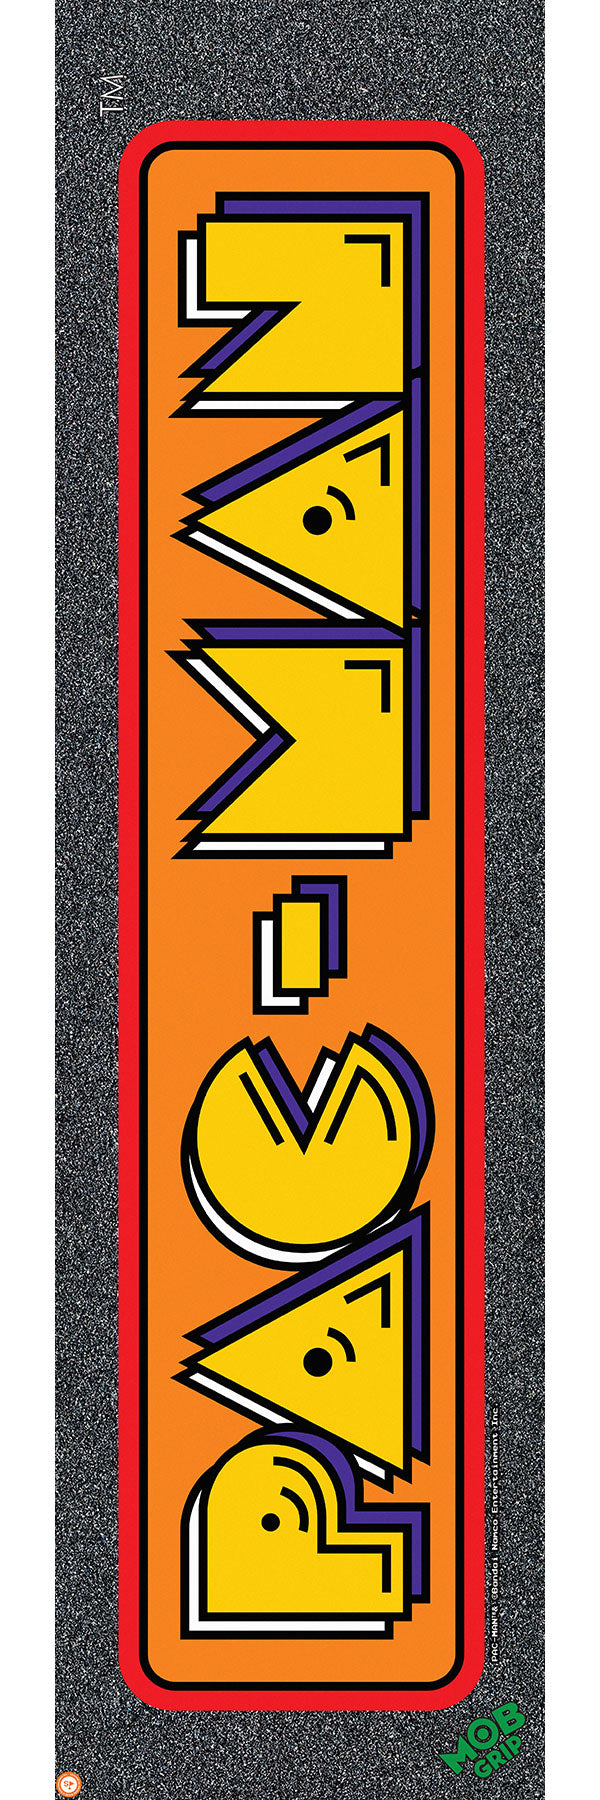 North West Decks on X: Pacman Grip Tape Art! #retro #gameart  #northwestdecks #pacman #level #ghost #skateboarding #skate #skater #art   / X